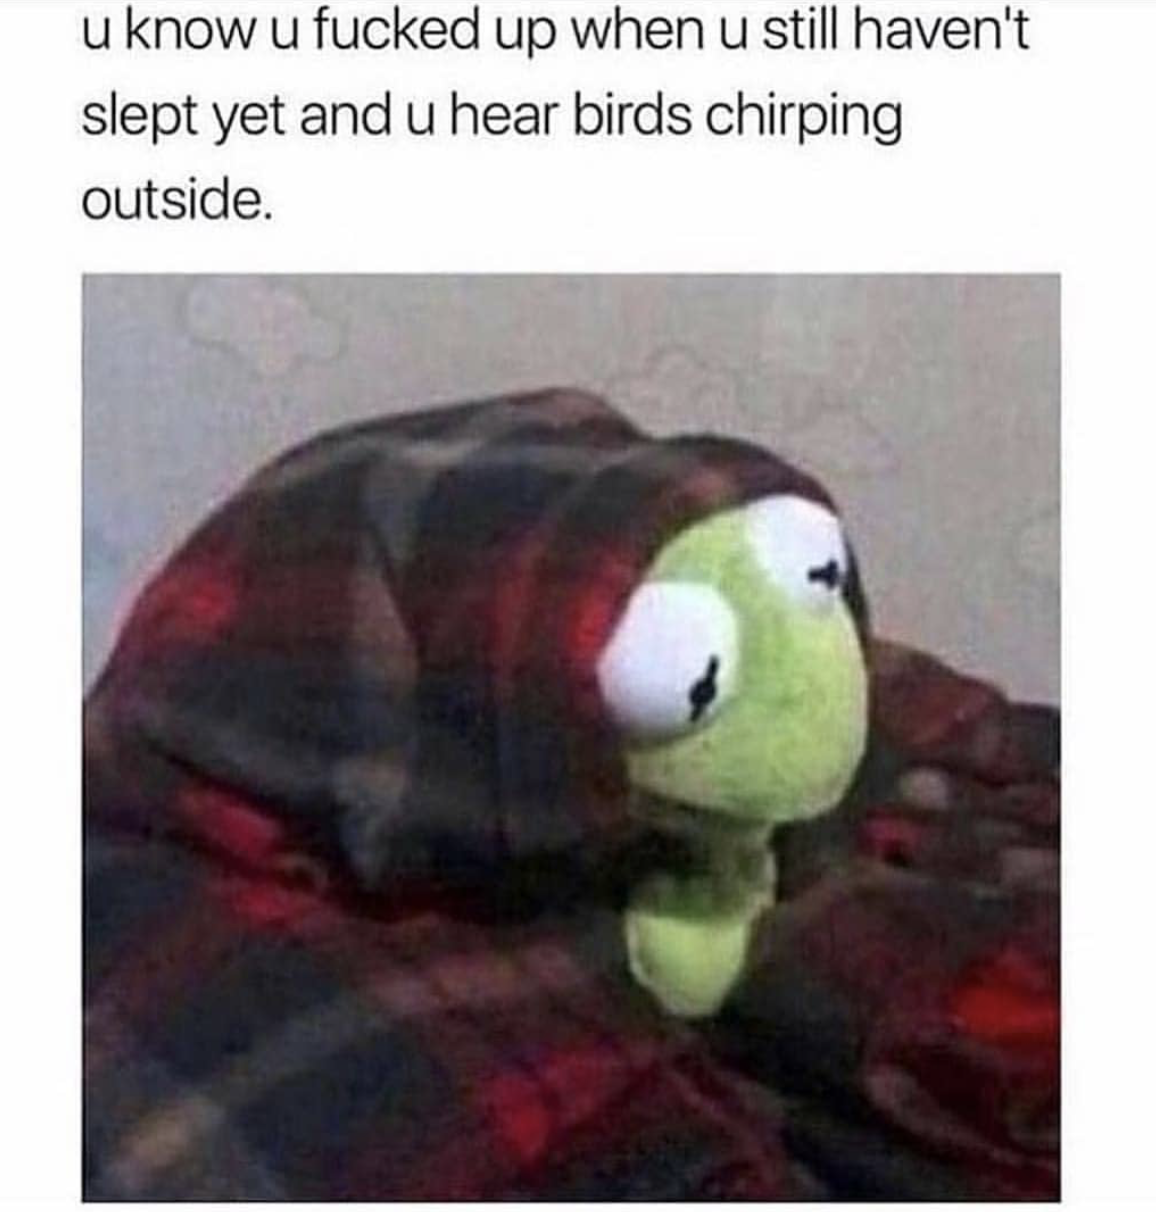 kermit meme - u know u fucked up when u still haven't slept yet and u hear birds chirping outside.